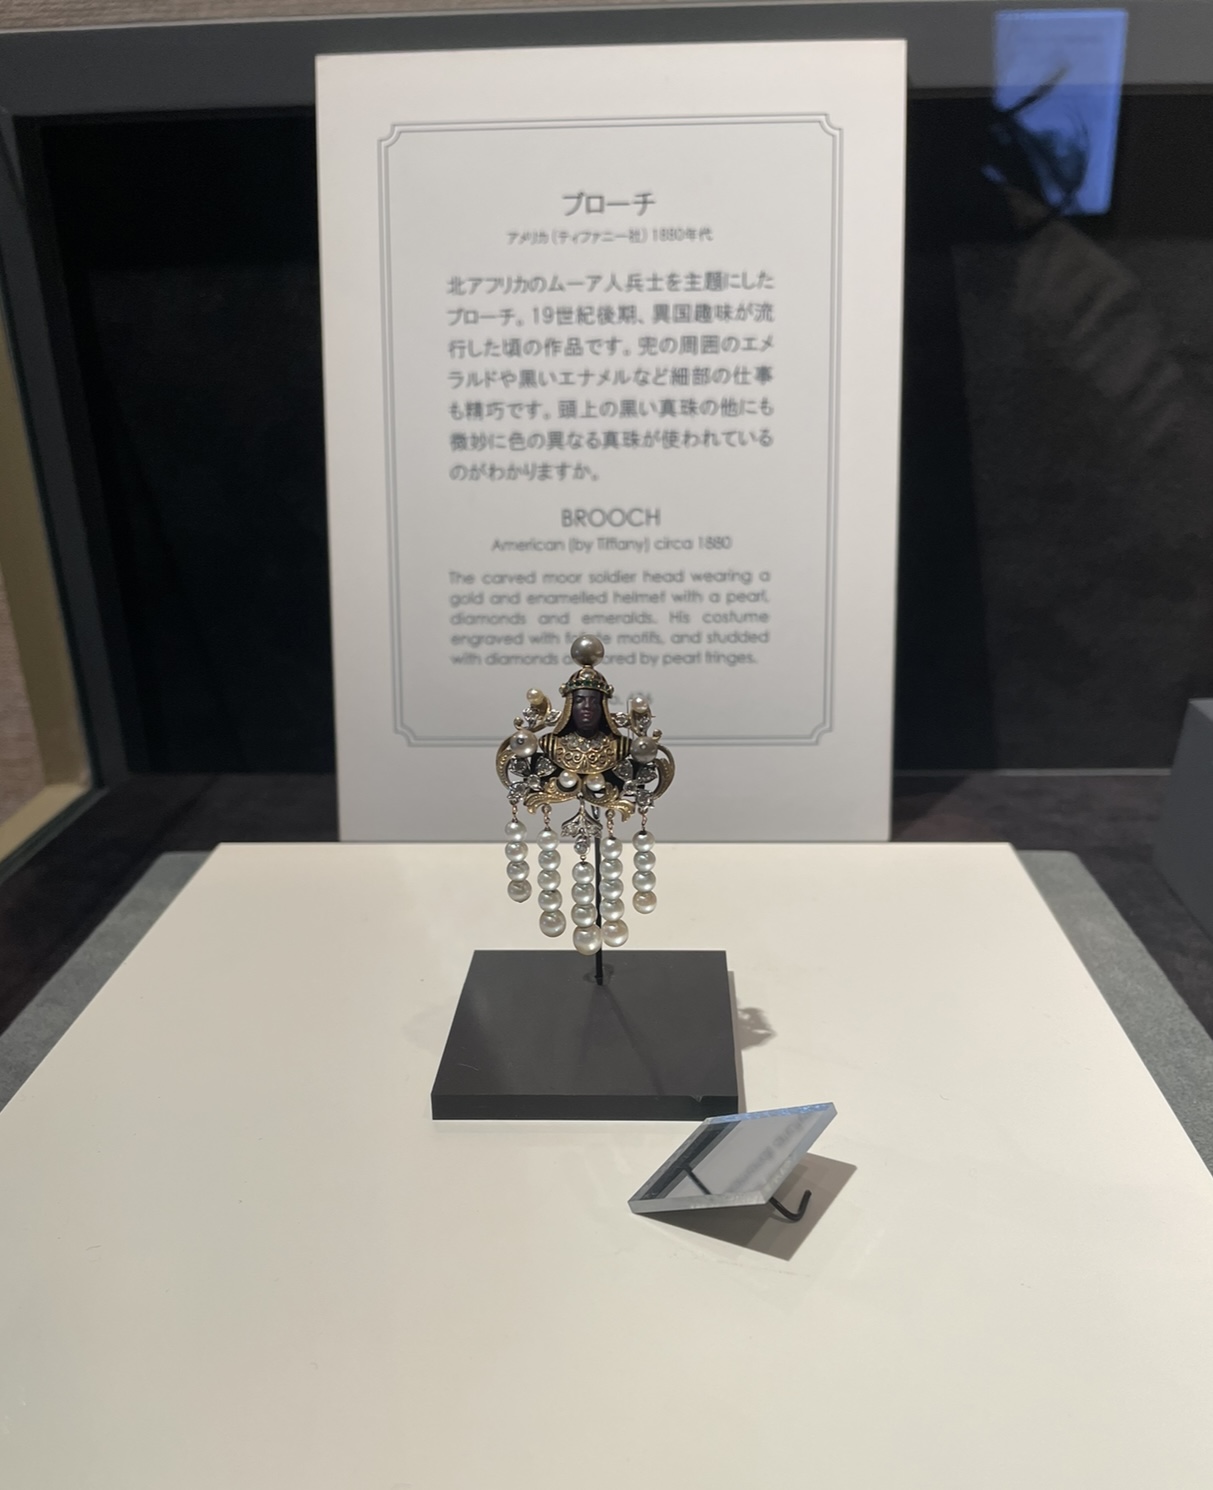 Tiffany Brooch of Japanese akoya pearls - Mikimoto Pearl Museum